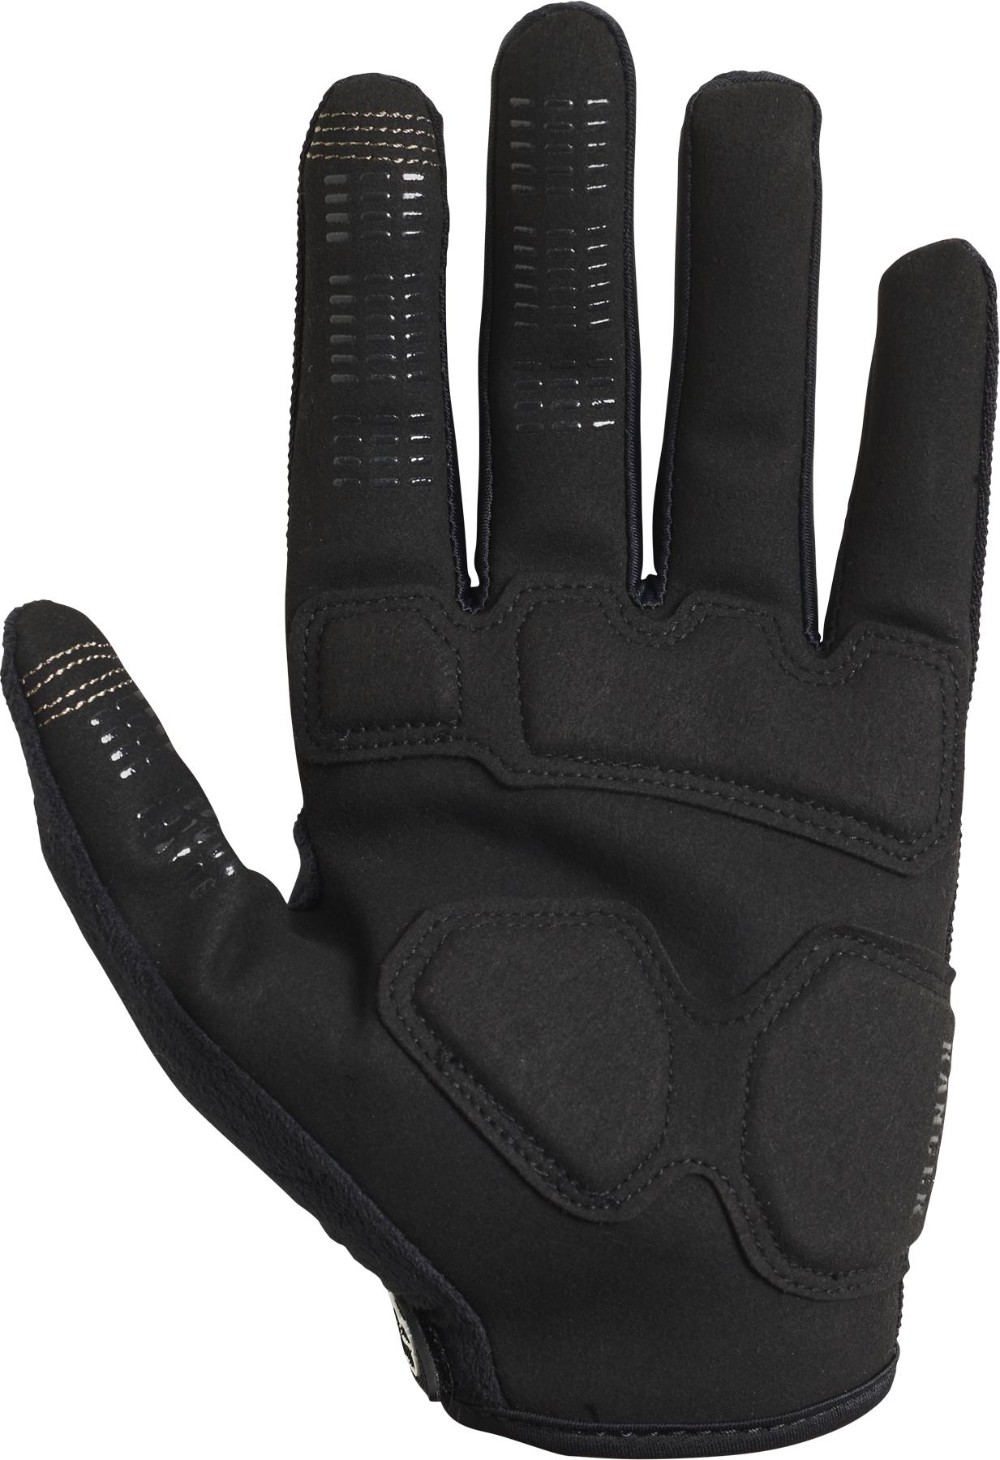 Ranger Gel Long Finger MTB Cycling Gloves image 1